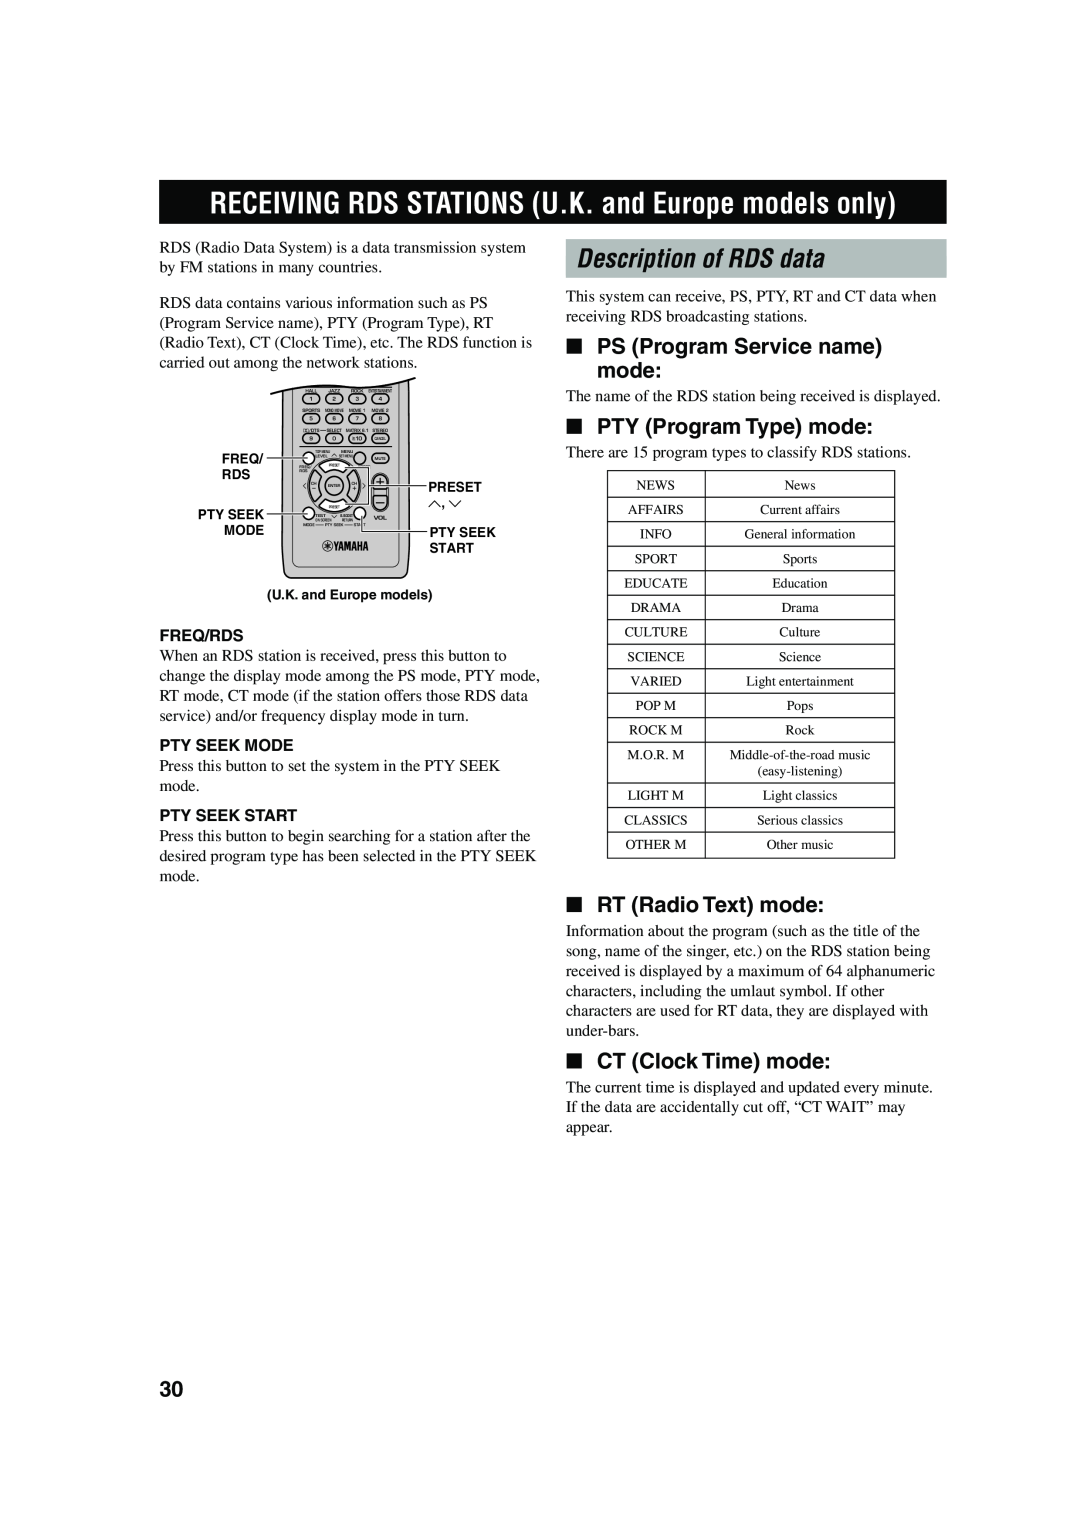 Yamaha AVX-S80 Description of RDS data, PTY Program Type mode, RT Radio Text mode, CT Clock Time mode, Freq/Rds 